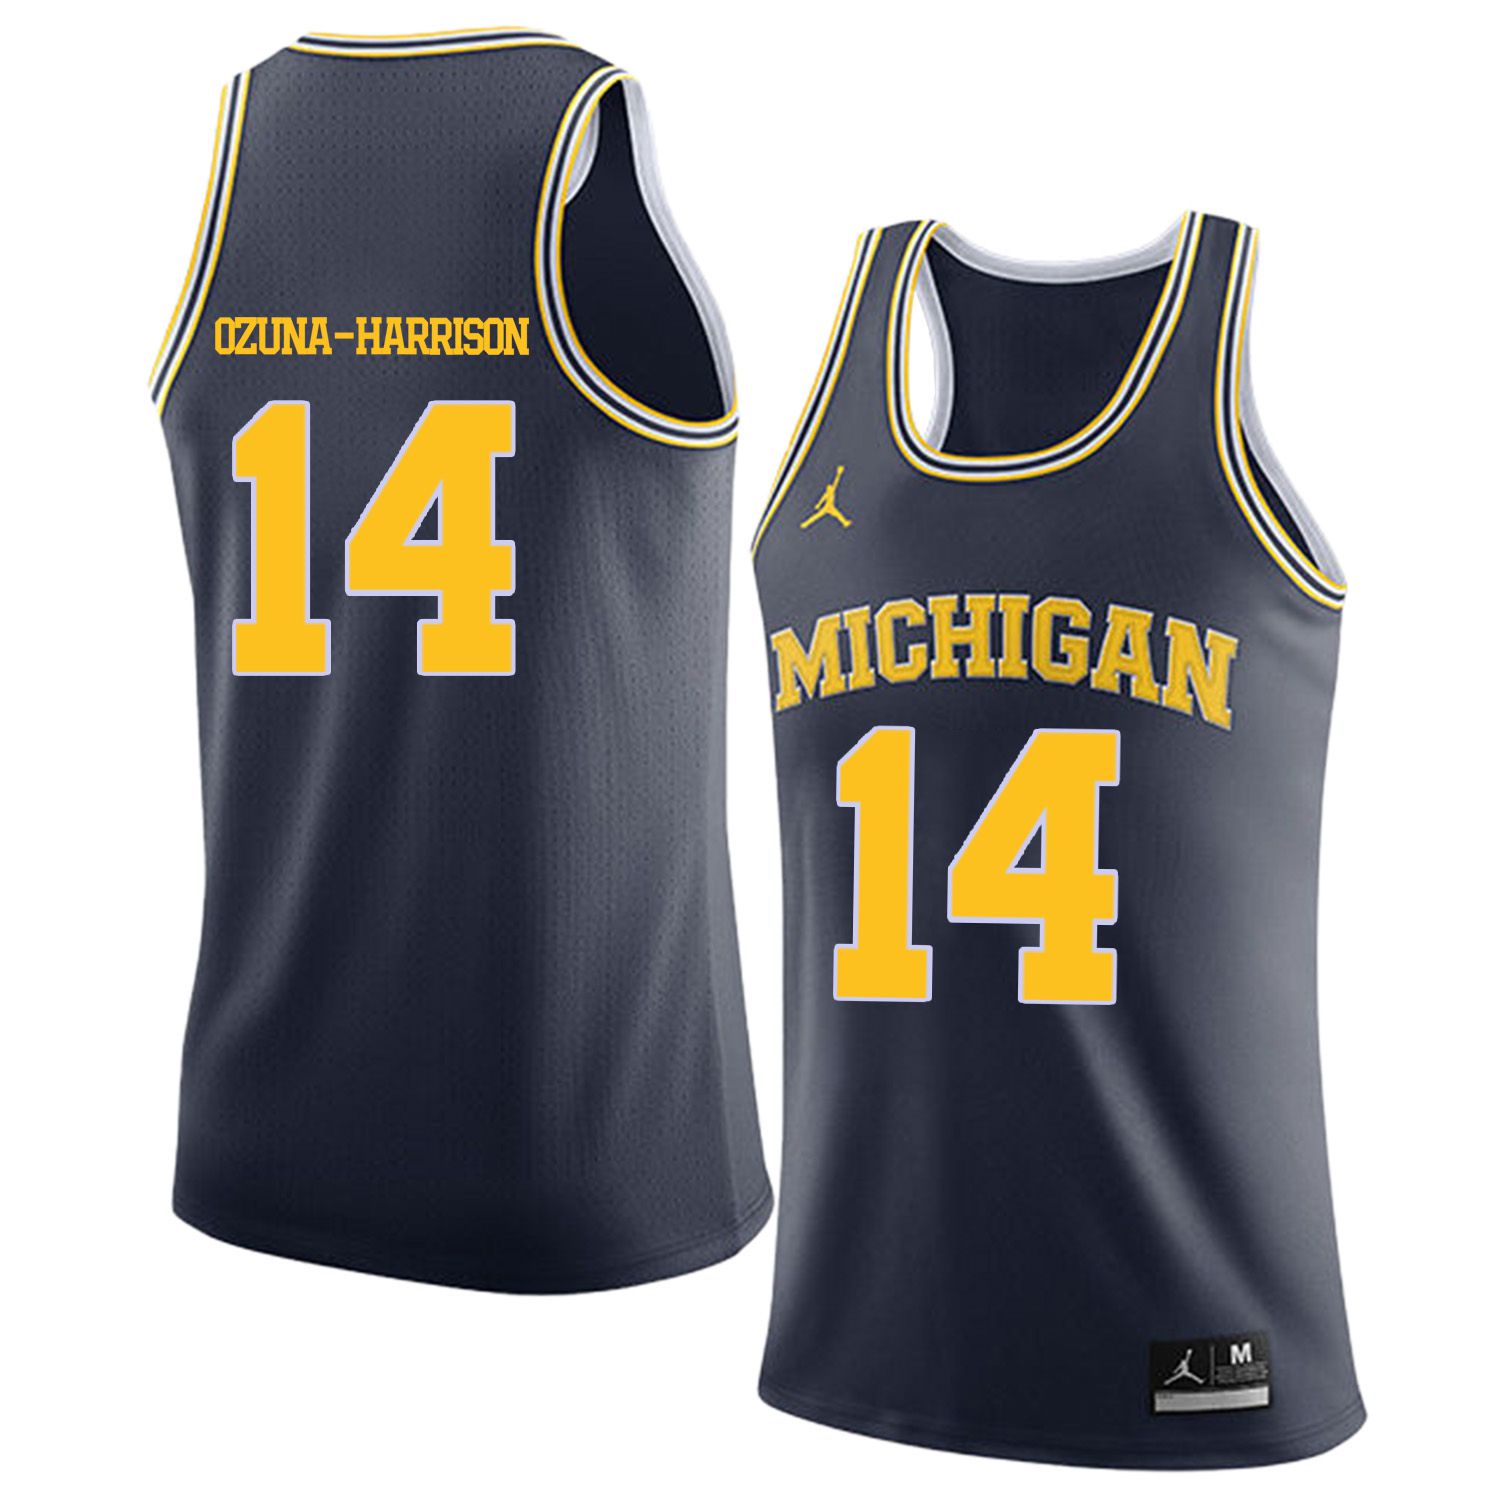 Men Jordan University of Michigan Basketball Navy 14 Ozuna-Harrison Customized NCAA Jerseys